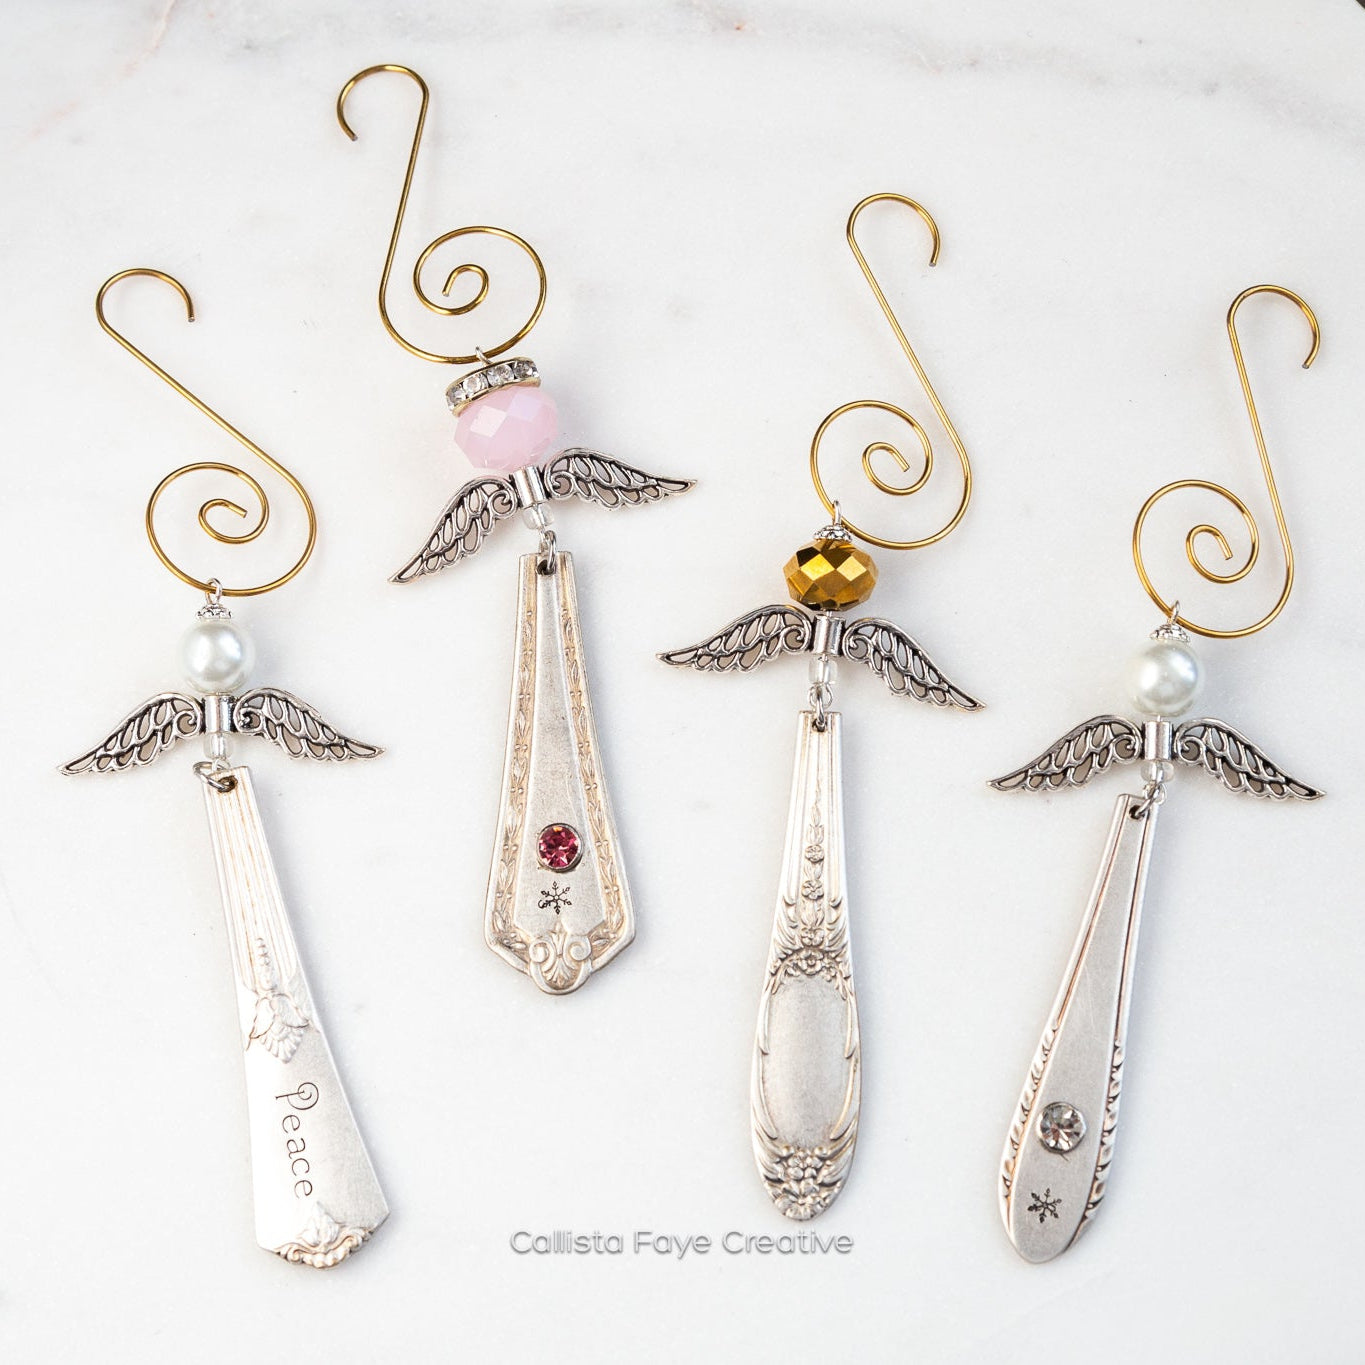 October, Pink Tourmaline Angel Ornament, Hand Stamped Vintage Spoon Ornament Ornaments callistafaye   